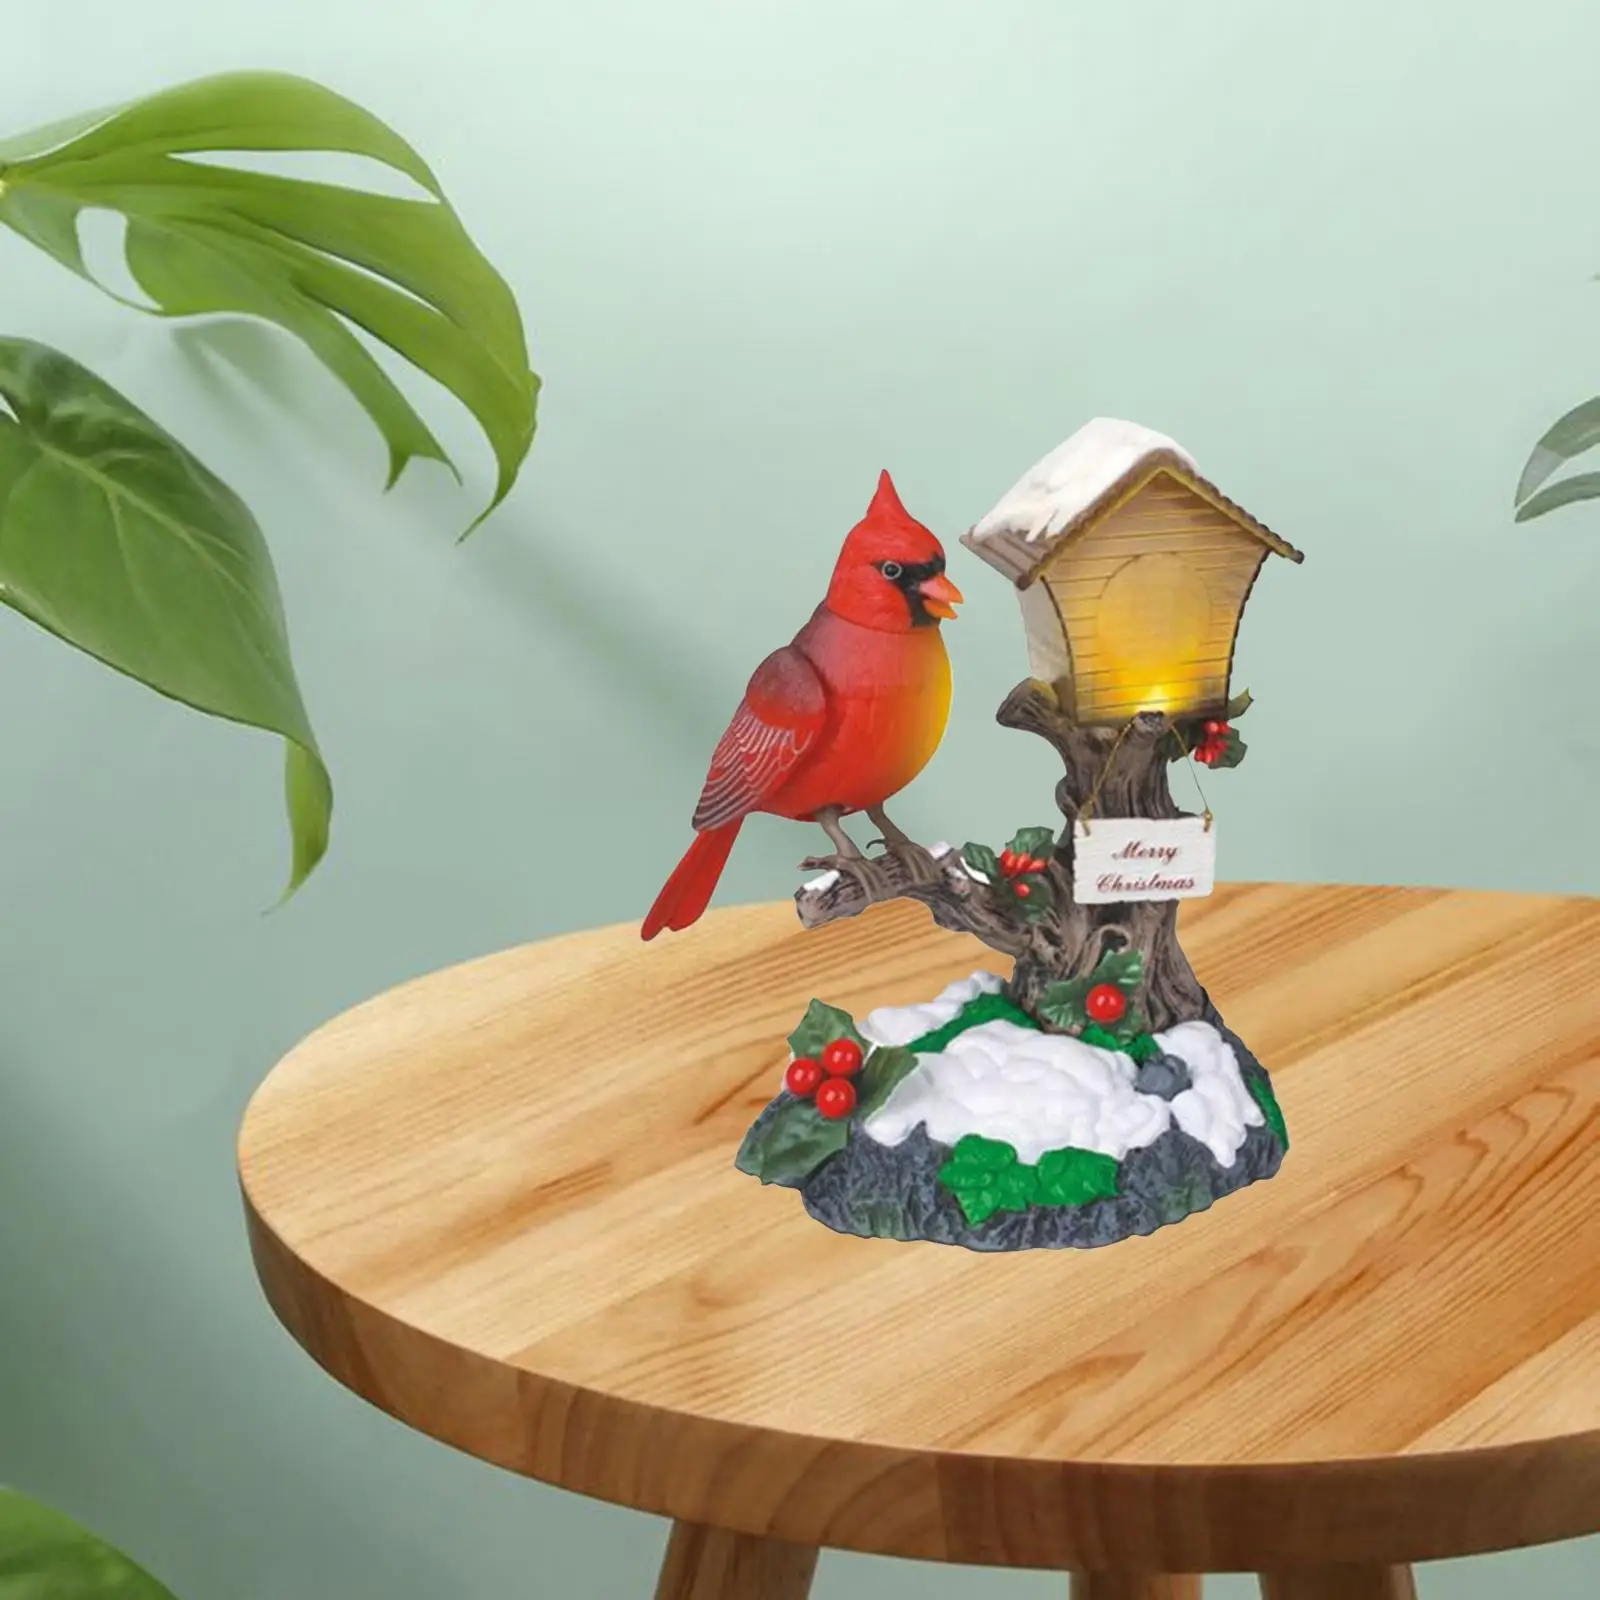 Talking Voice Control Bird Toy Chirping Bird Christmas Gift Children Toy